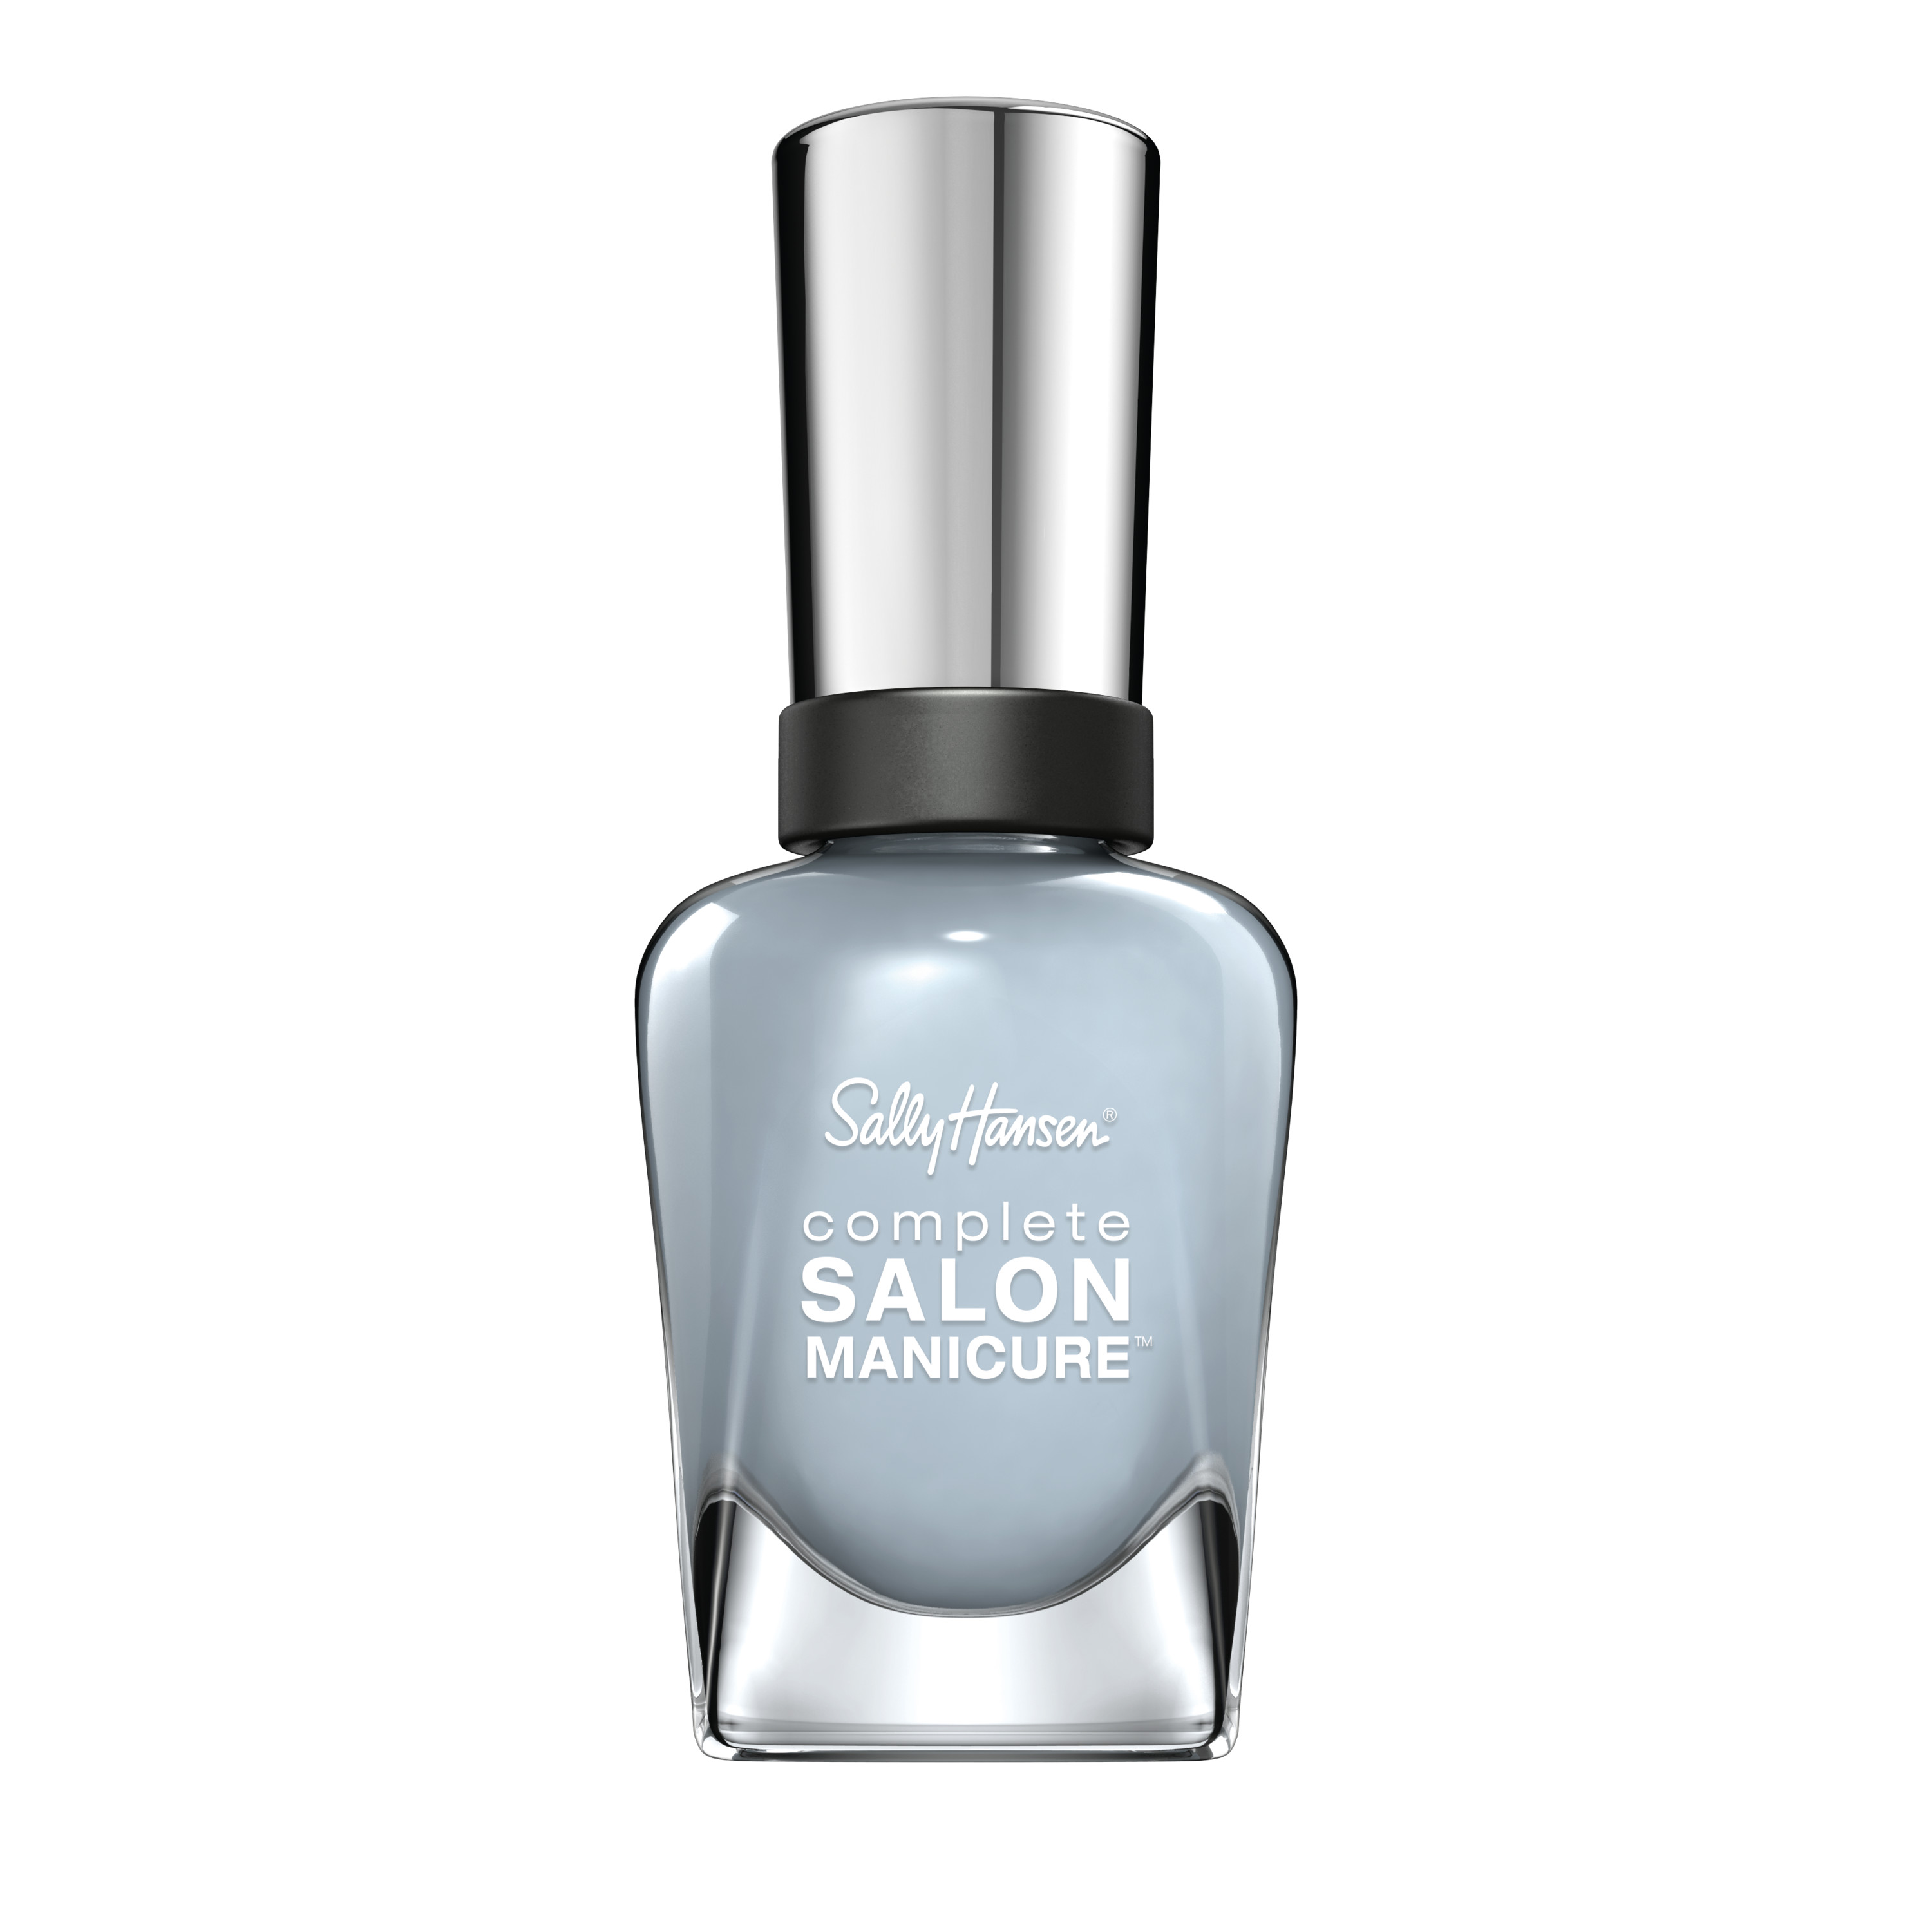 Sally Hansen- Complete Salon Manicure In Full Blue-m 0.5 fl oz - image 1 of 4